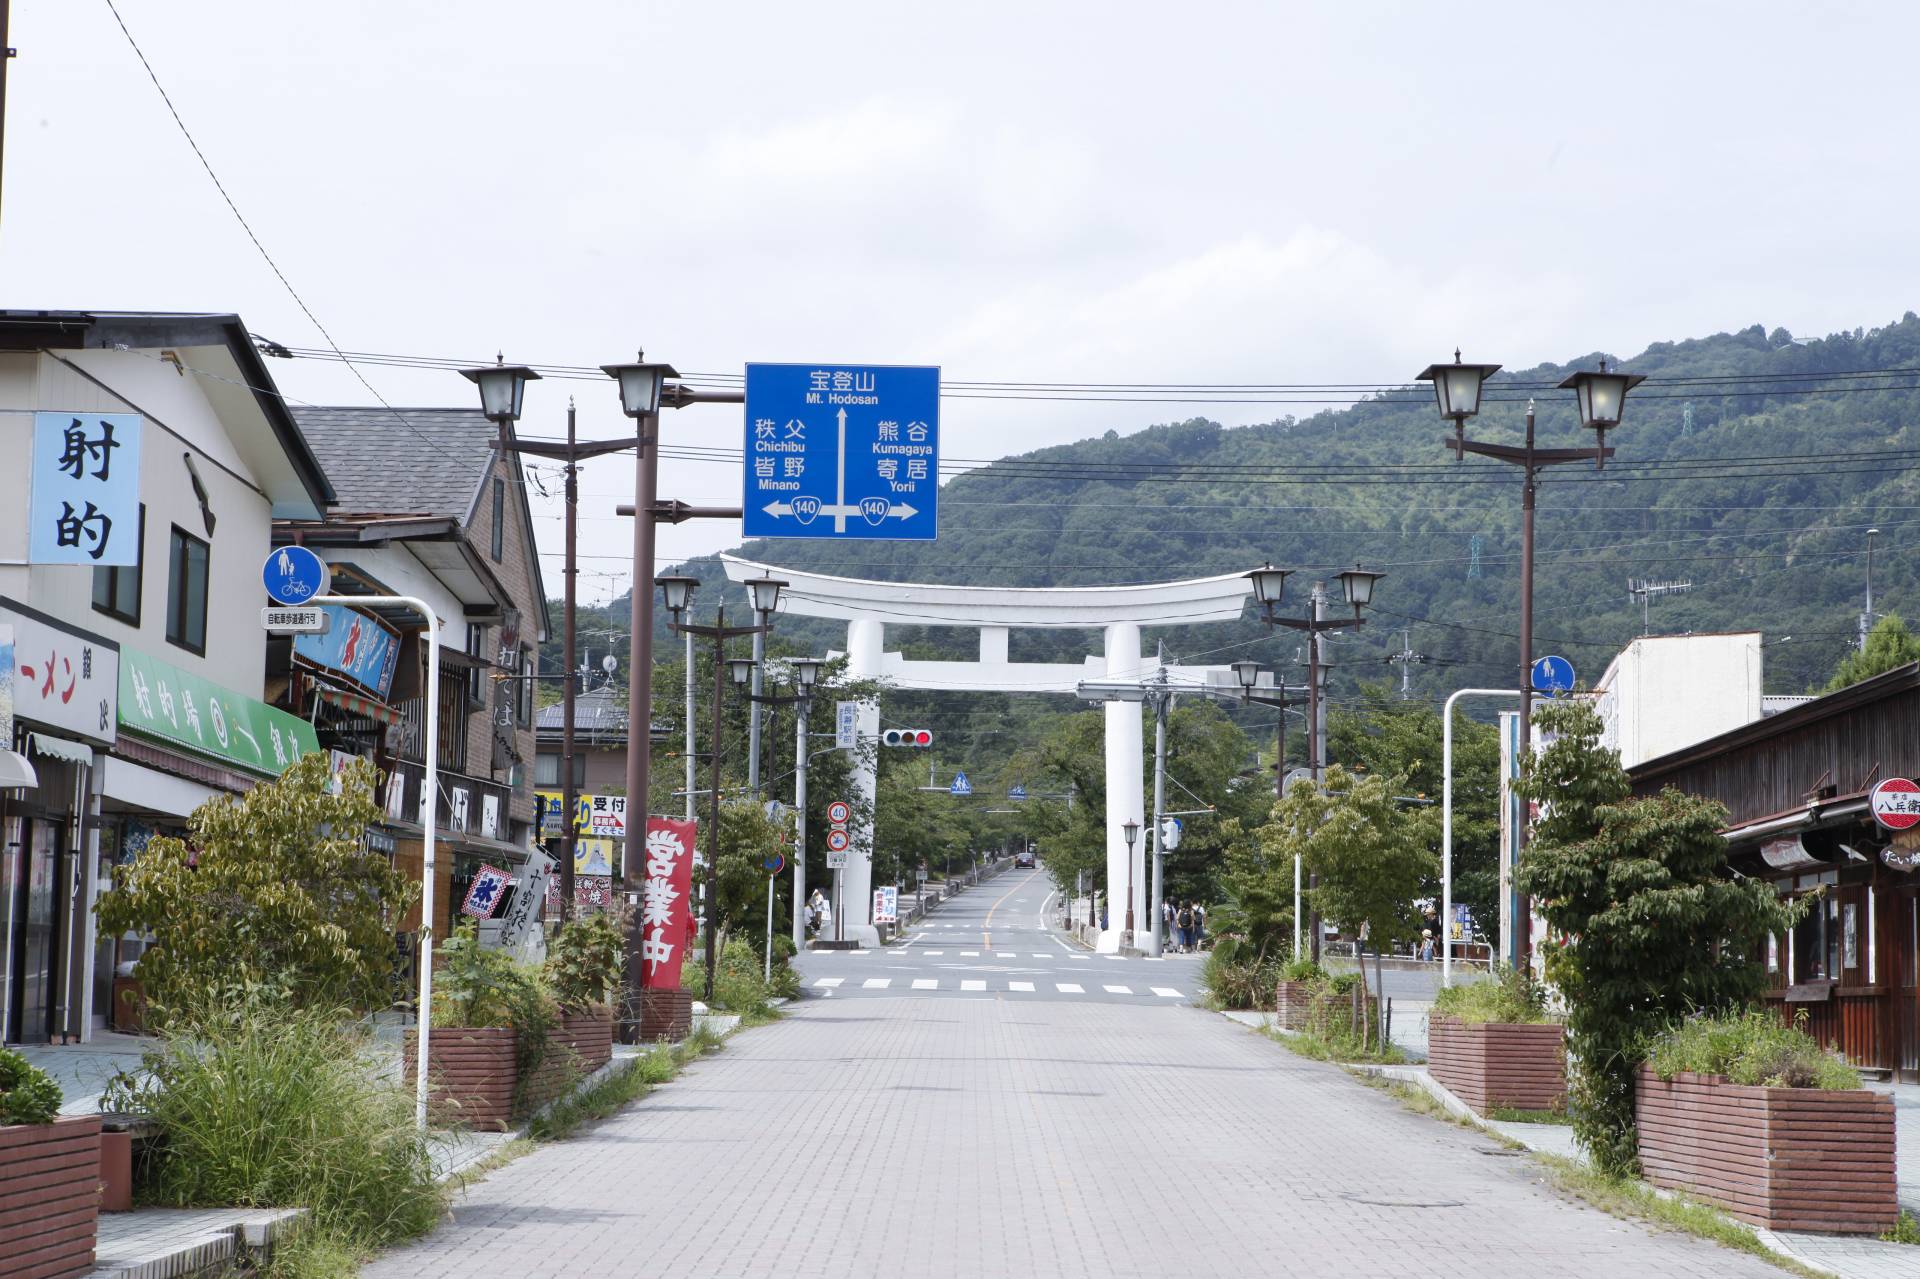 Just pass through the white “otorii" gate of Hodosan Shrine, then you can Asami Reizo.